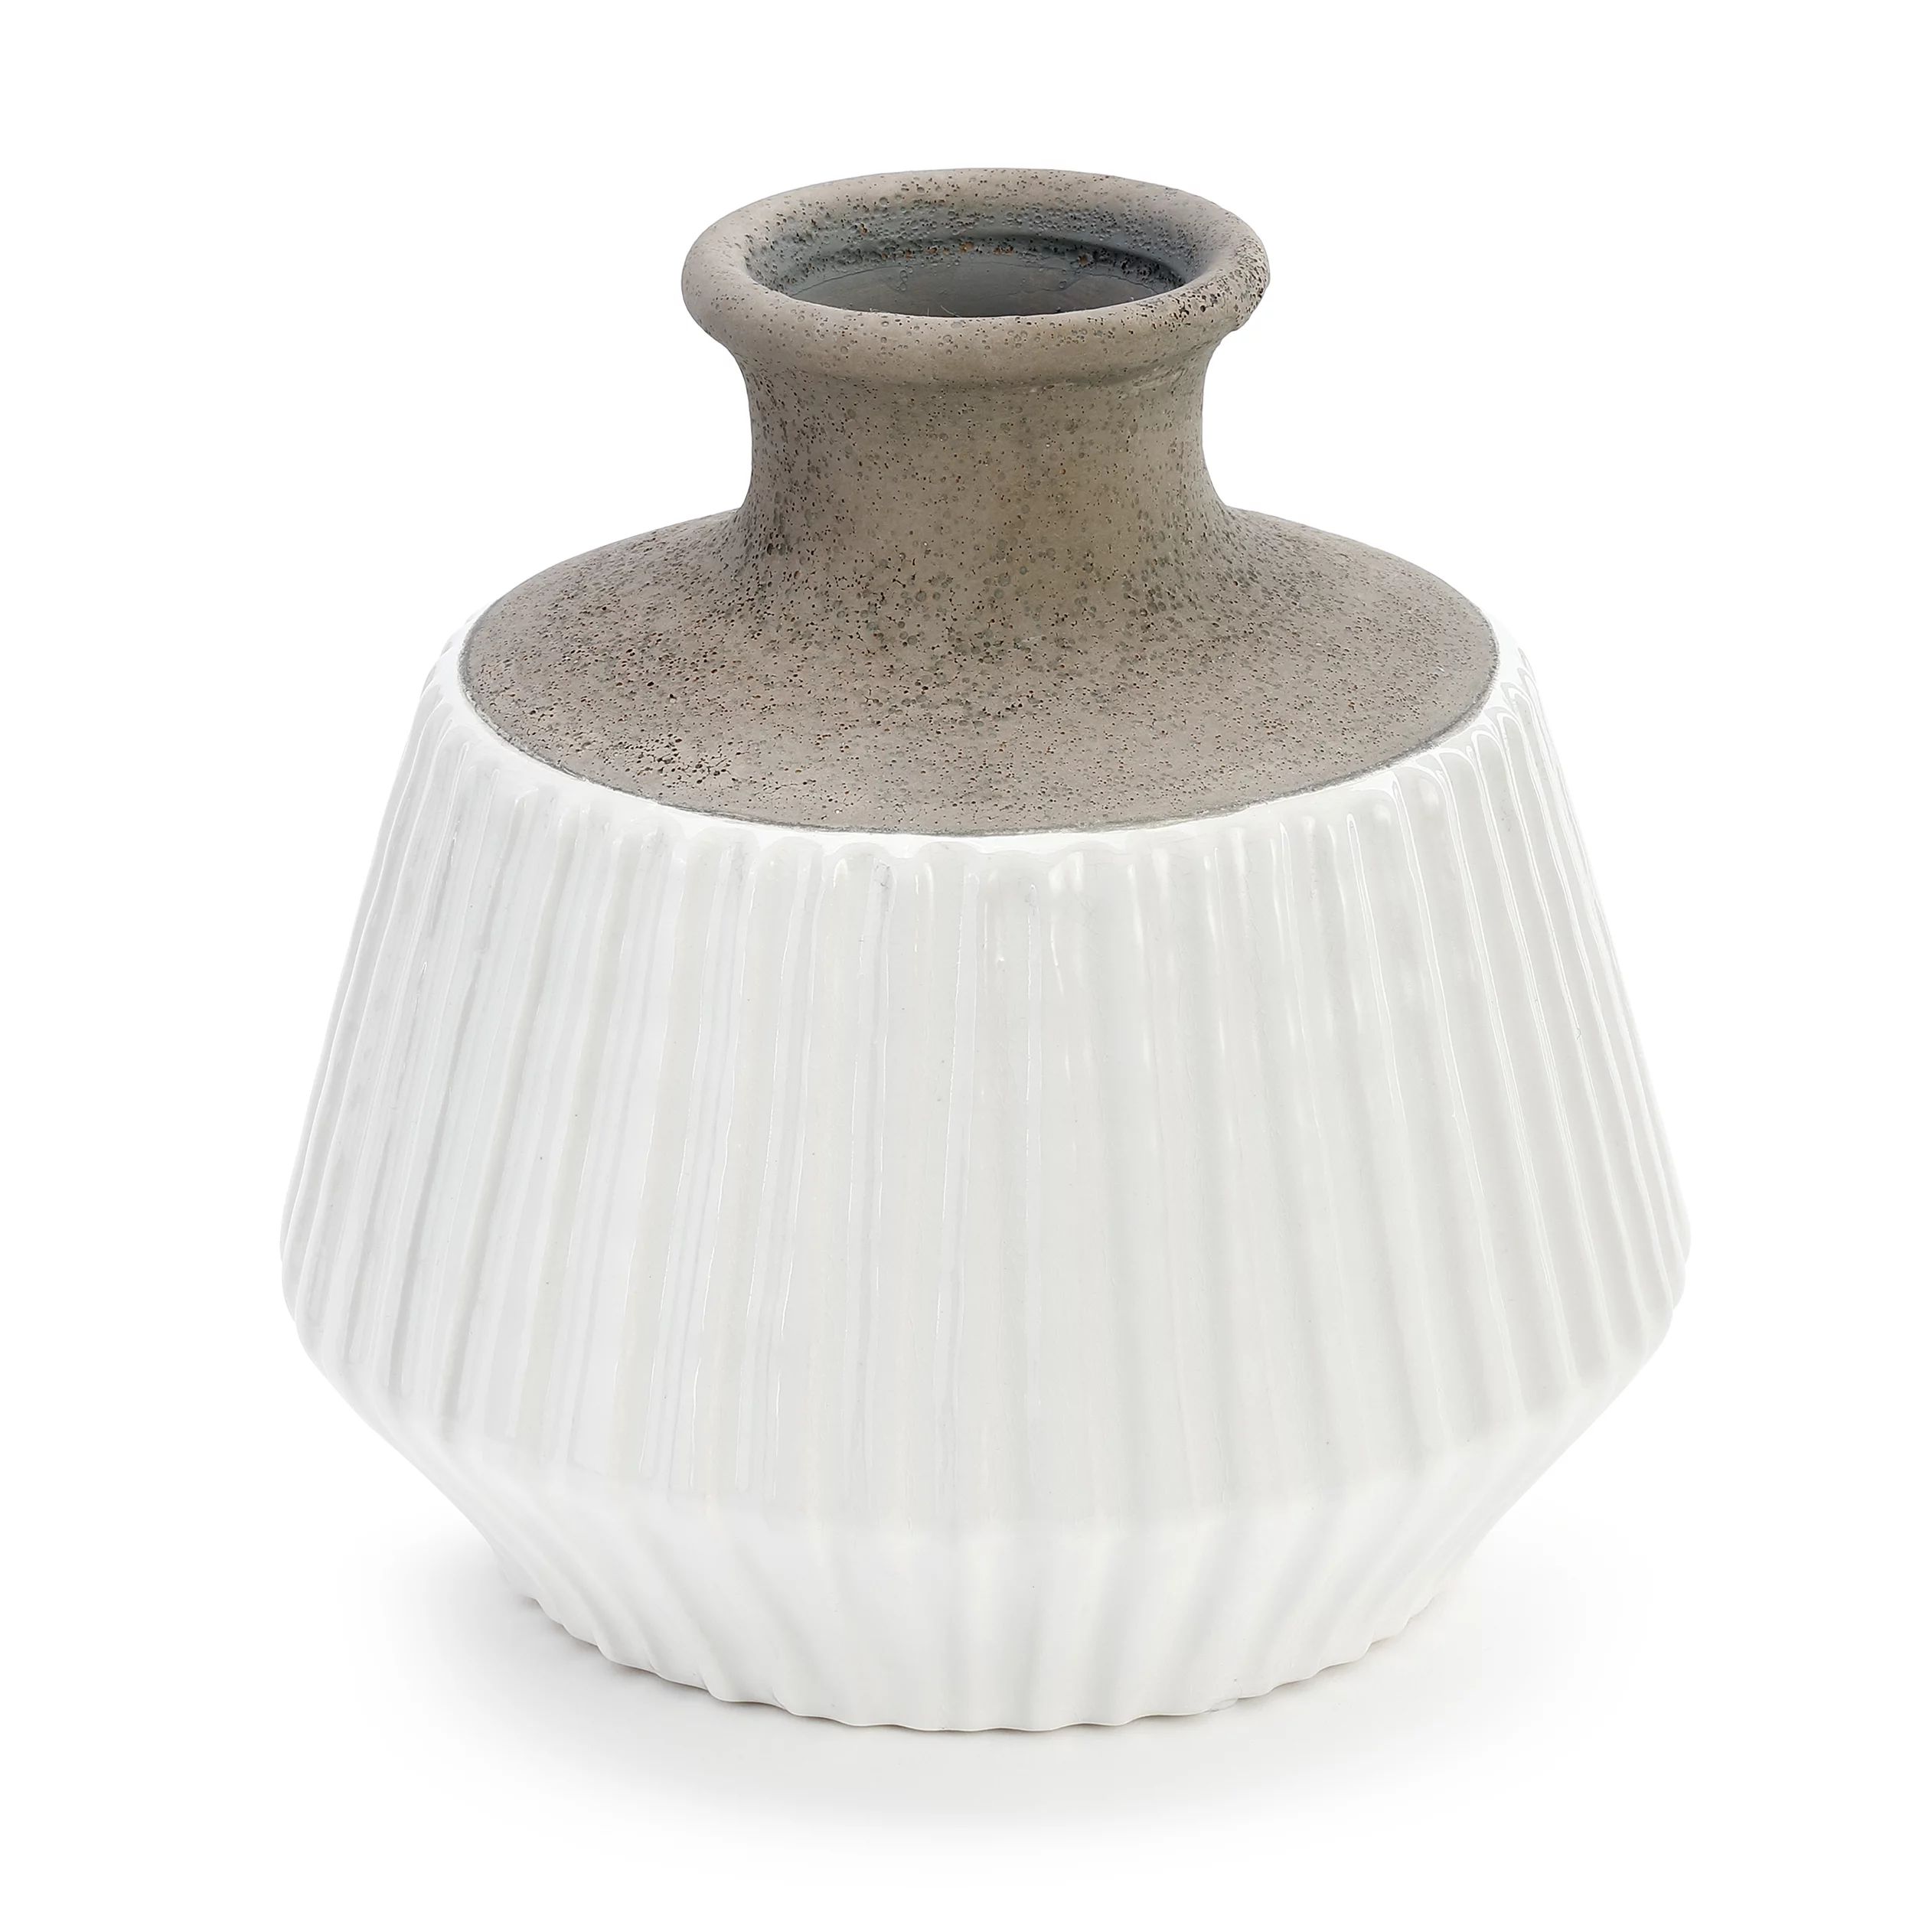 DEMDACO Dipped Fluted Glossy Grey and White 9 x 8 Ceramic Stoneware Decorative Vase | Walmart (US)